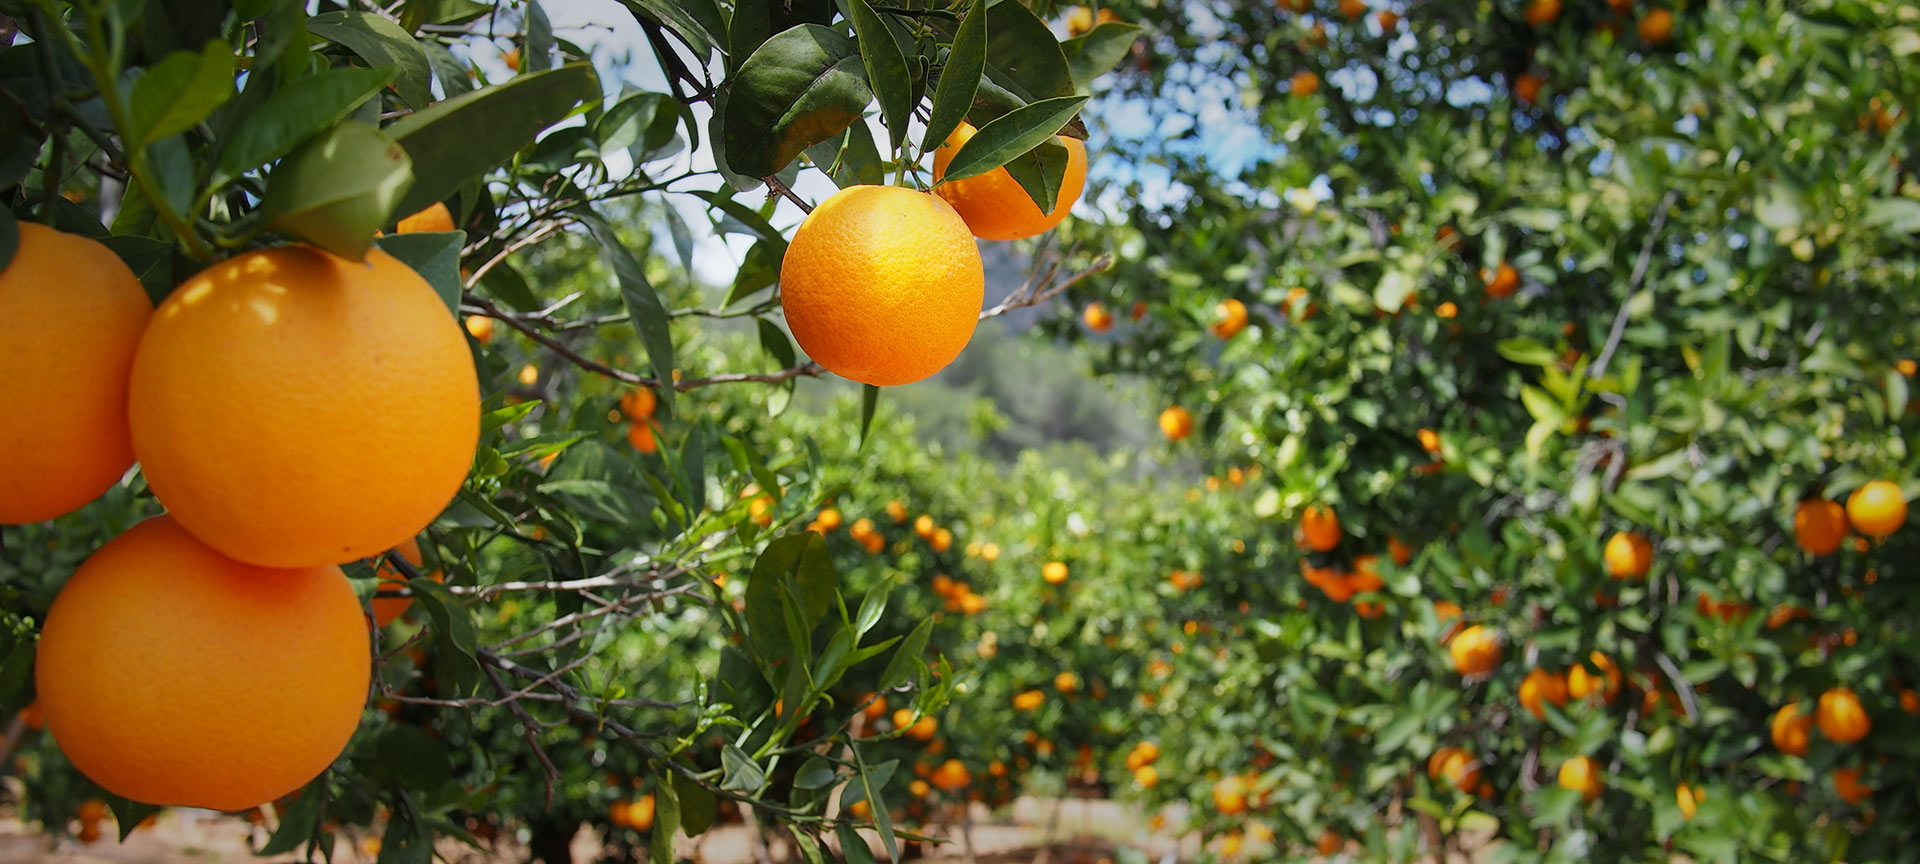 Sinaasappels aan boom in boomgaard.